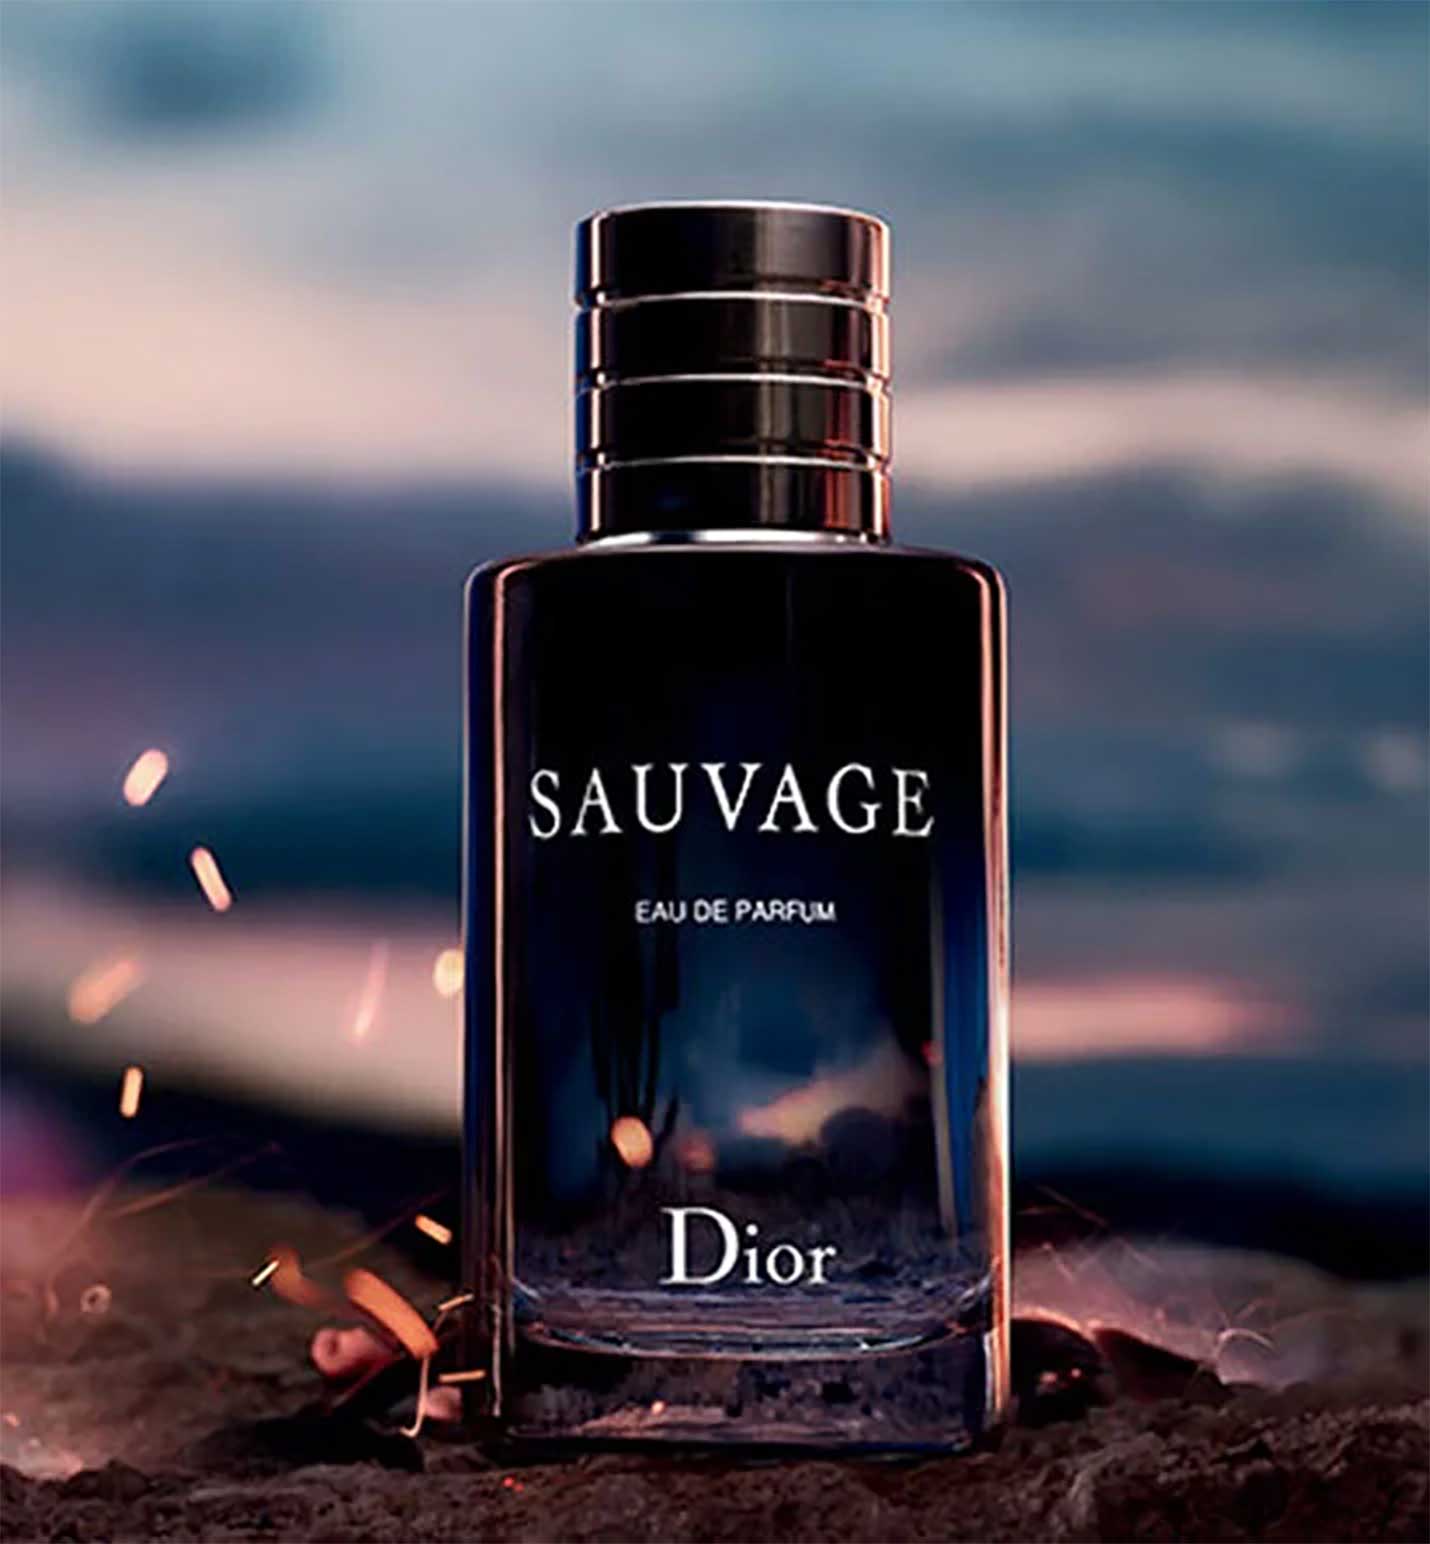 dior-sauavge-perfume